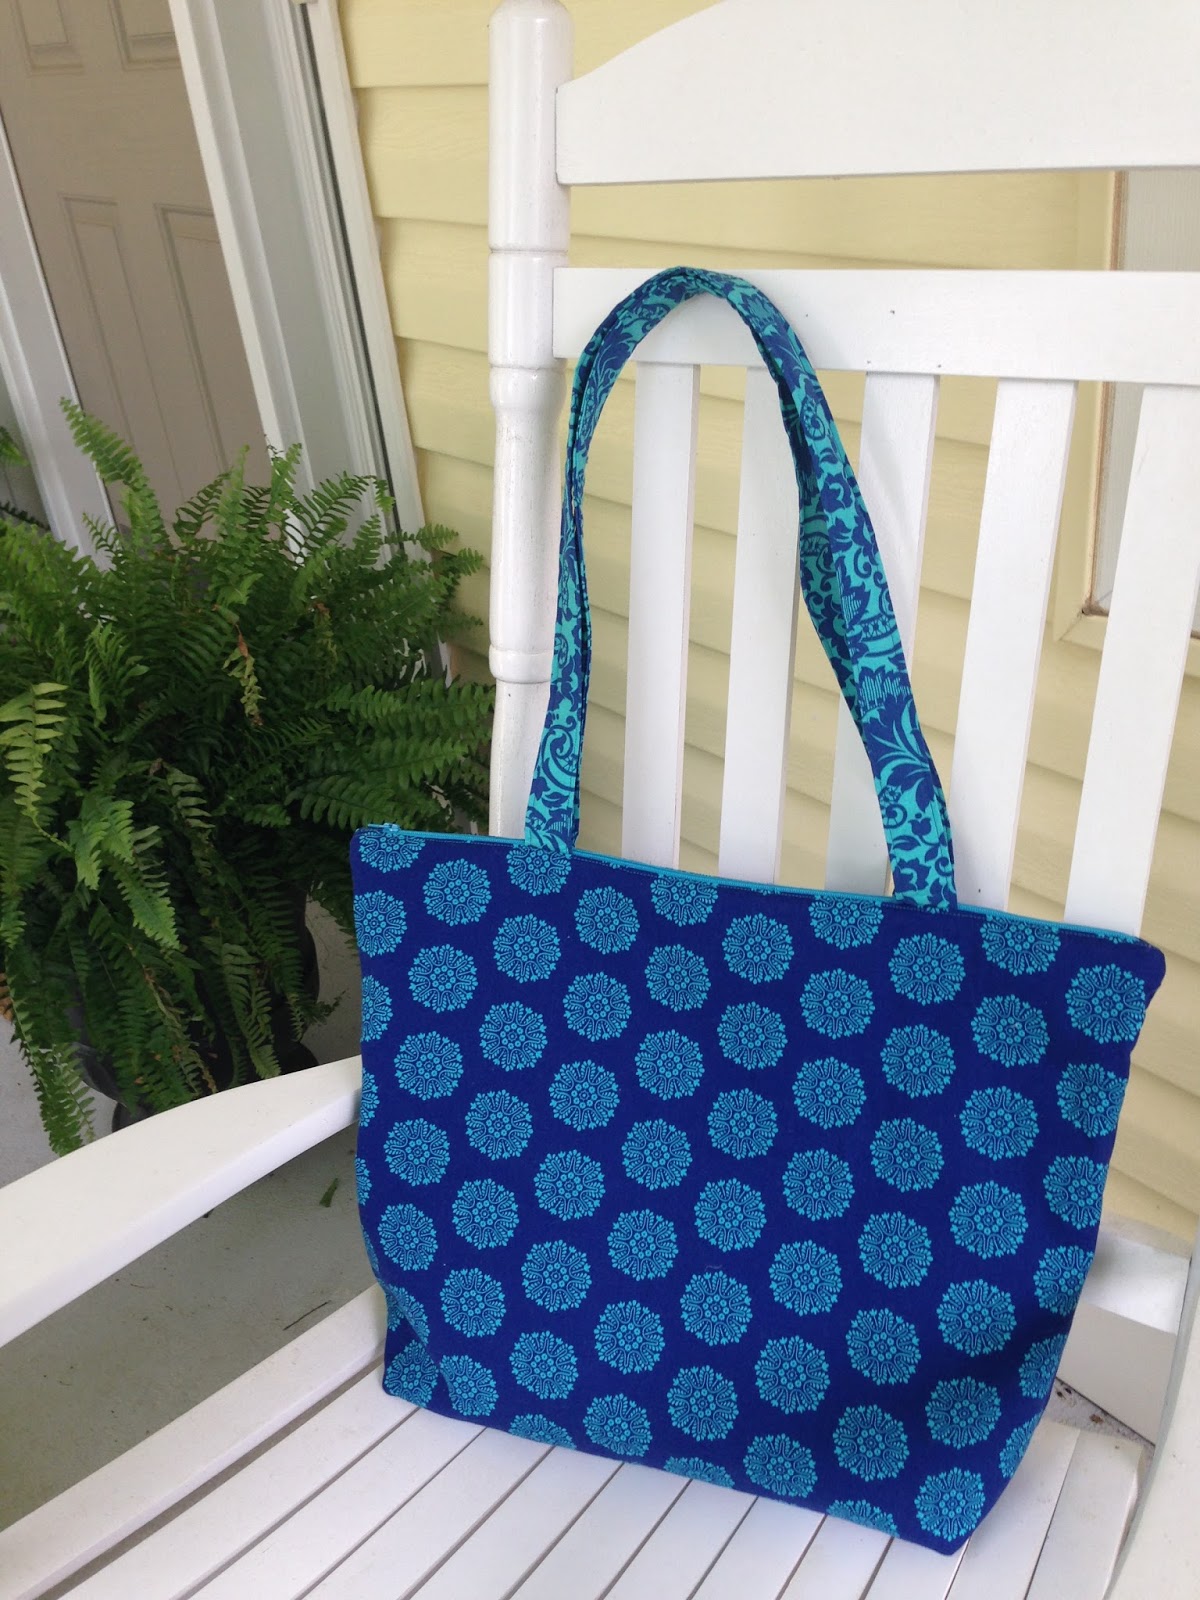 Sew Inspired Handmade Love: Zippered Tote Bag Tutorial